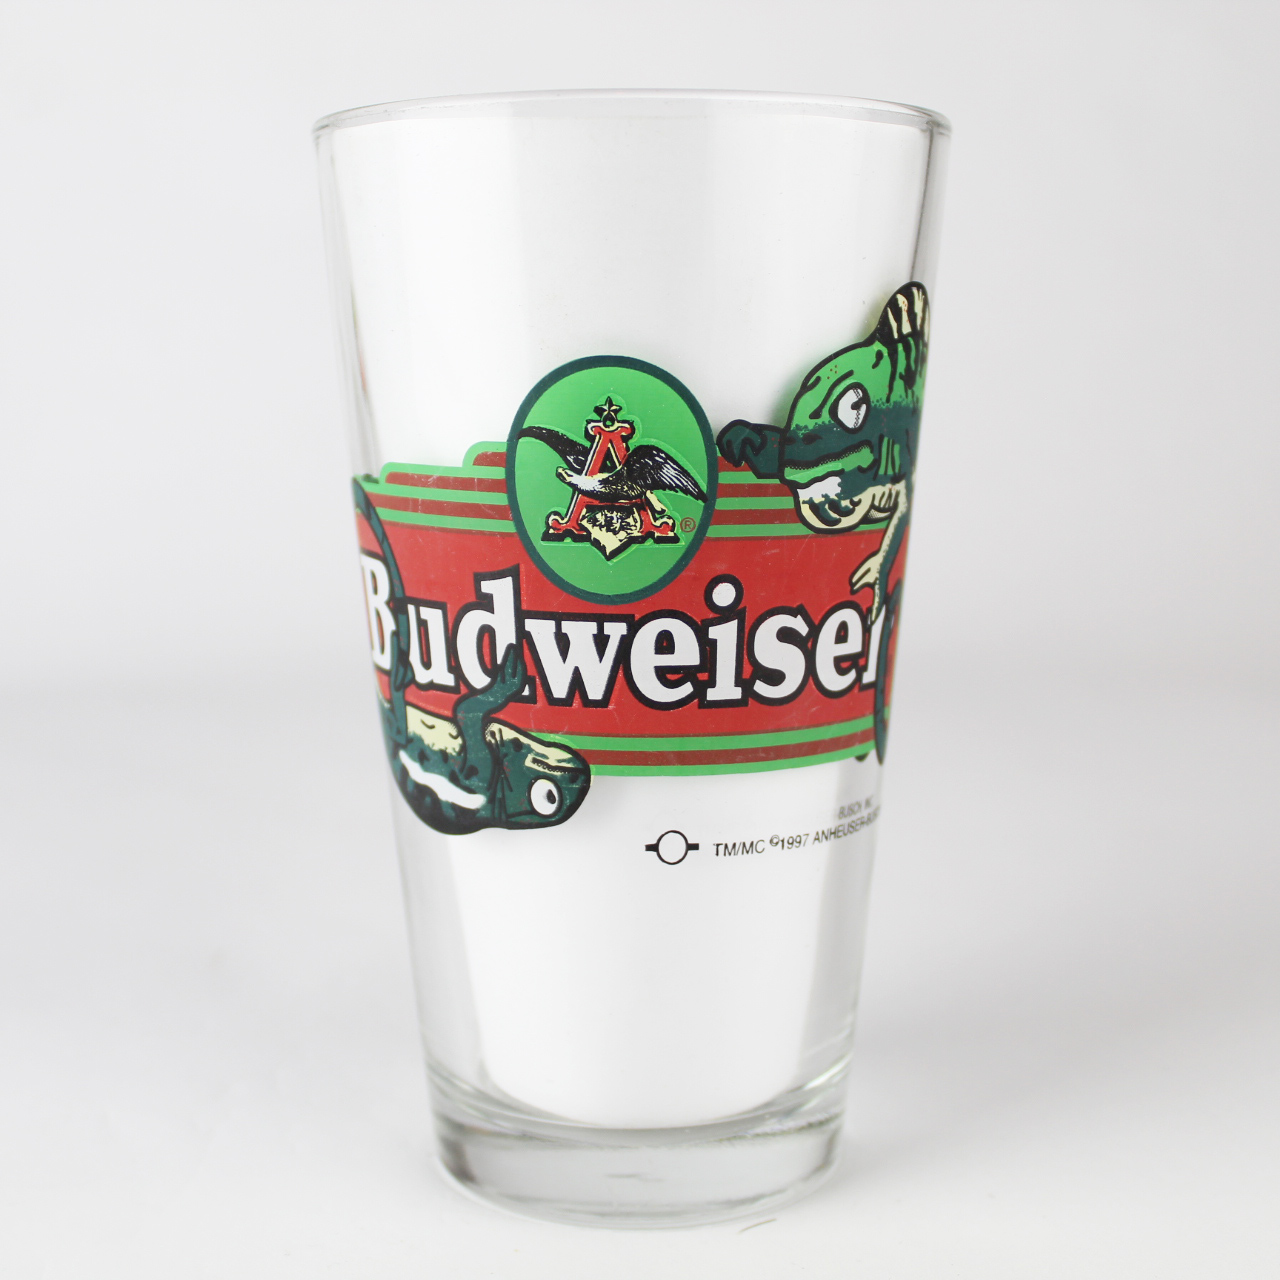 Details about   Budweiser "Texas Most Wanted" Lizard Chameleon Beer Pint Glass Excellent! 